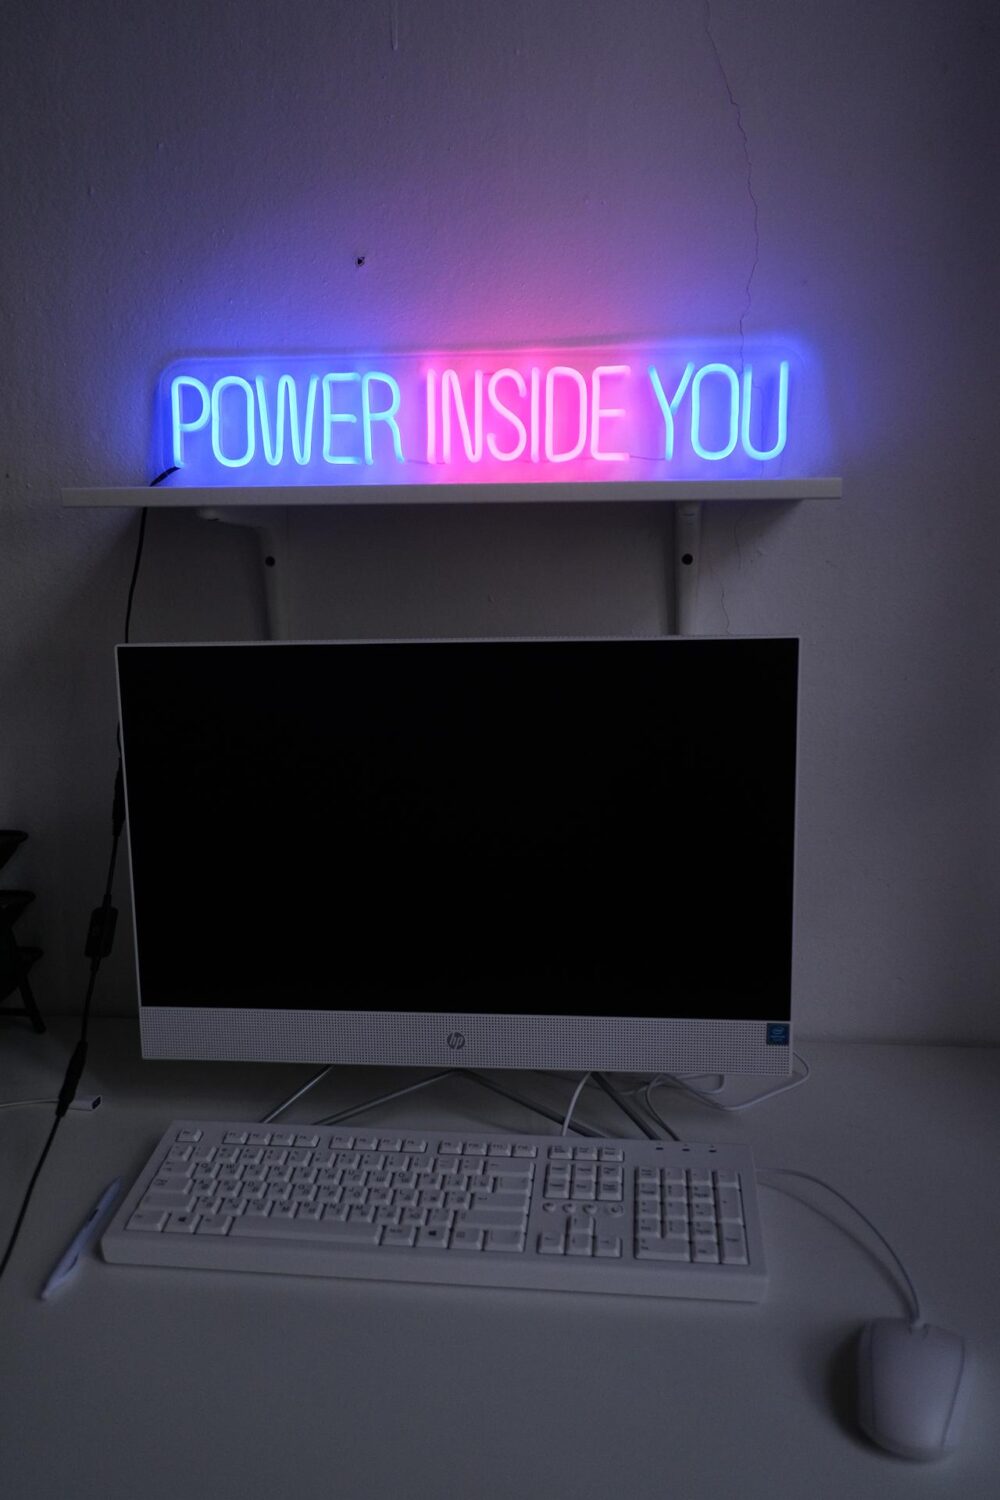 Power inside you